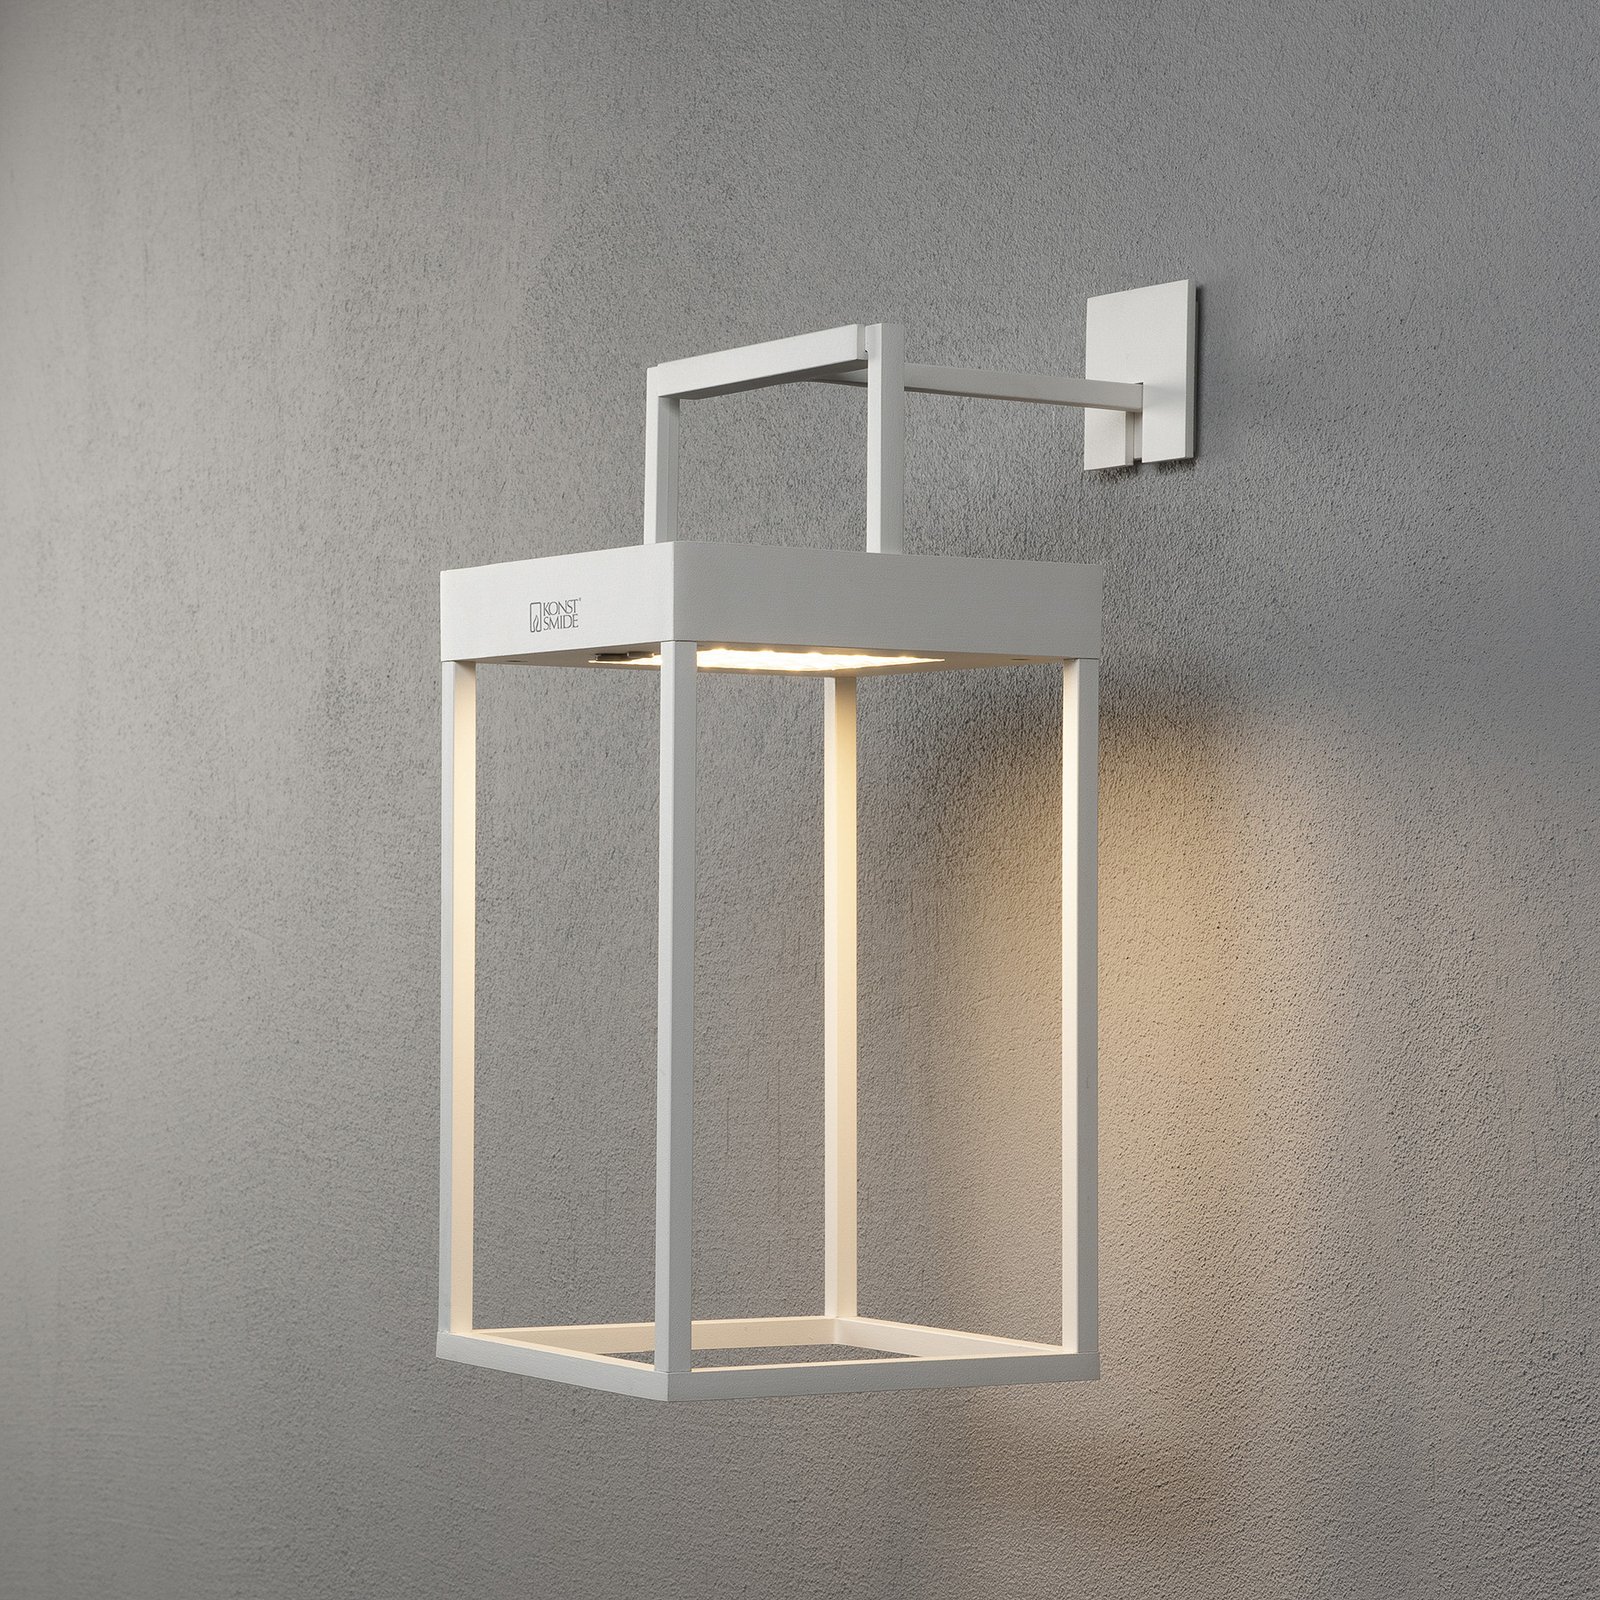 LED-Solarlaterne Portofino, Wand / Tisch, weiß